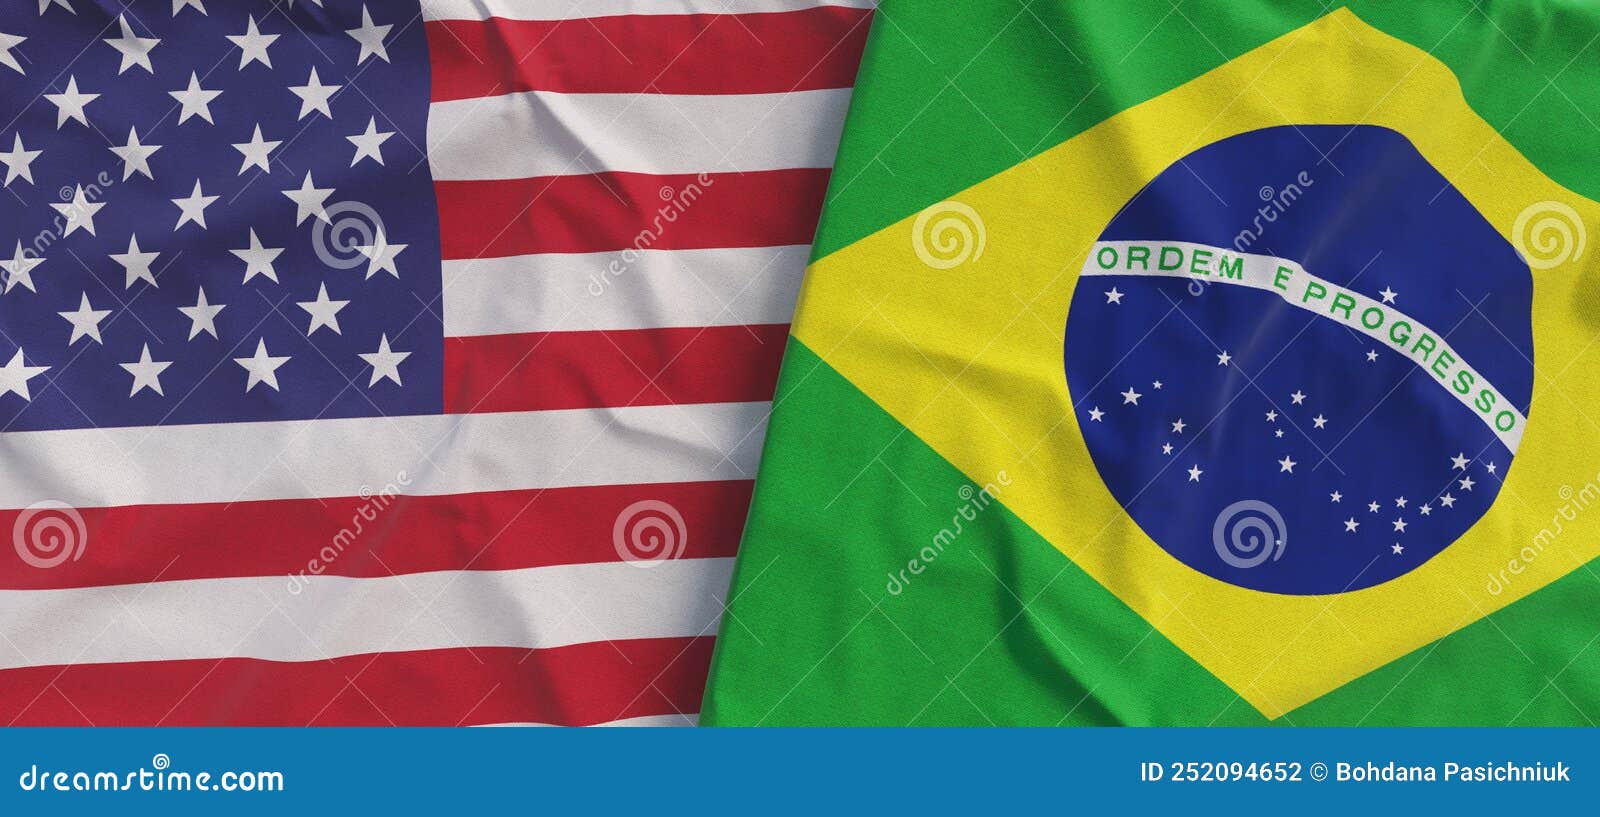 https://thumbs.dreamstime.com/z/bandeiras-dos-eua-e-do-brasil-arm%C3%A1rio-de-bandeira-feita-tecido-estados-unidos-am%C3%A9rica-brasileiro-s%C3%ADmbolos-nacionais-d-arma%C3%A7%C3%A3o-252094652.jpg